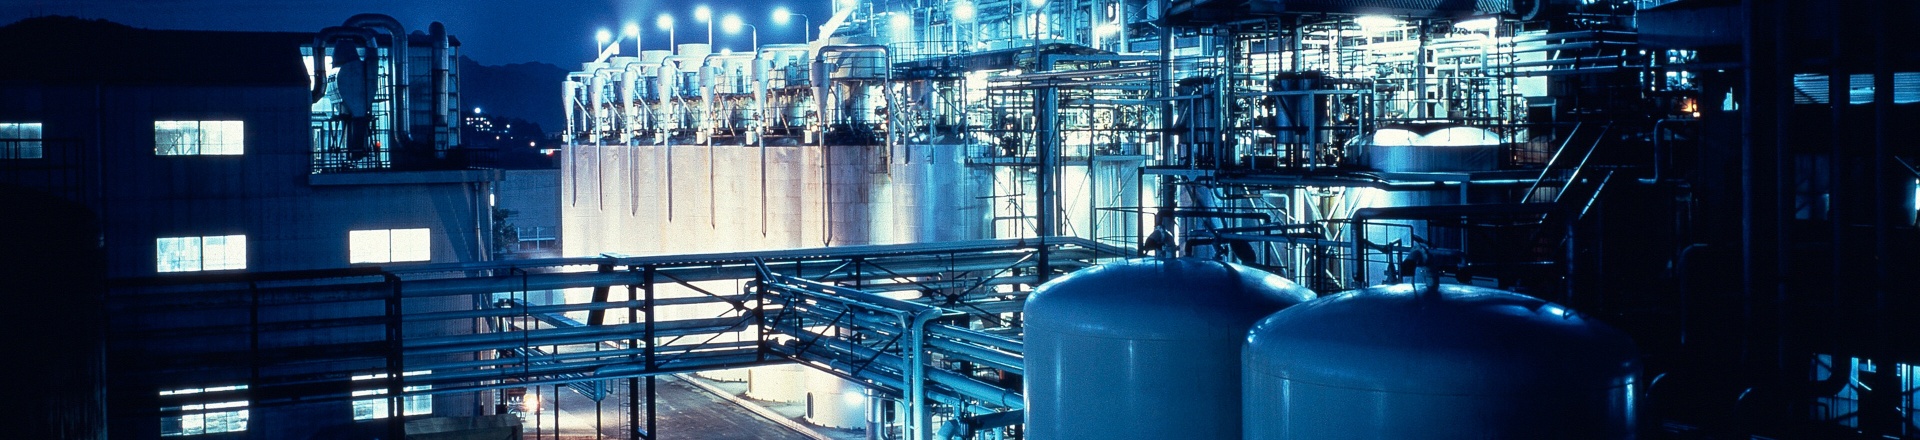 Image of Kyowa production facilities